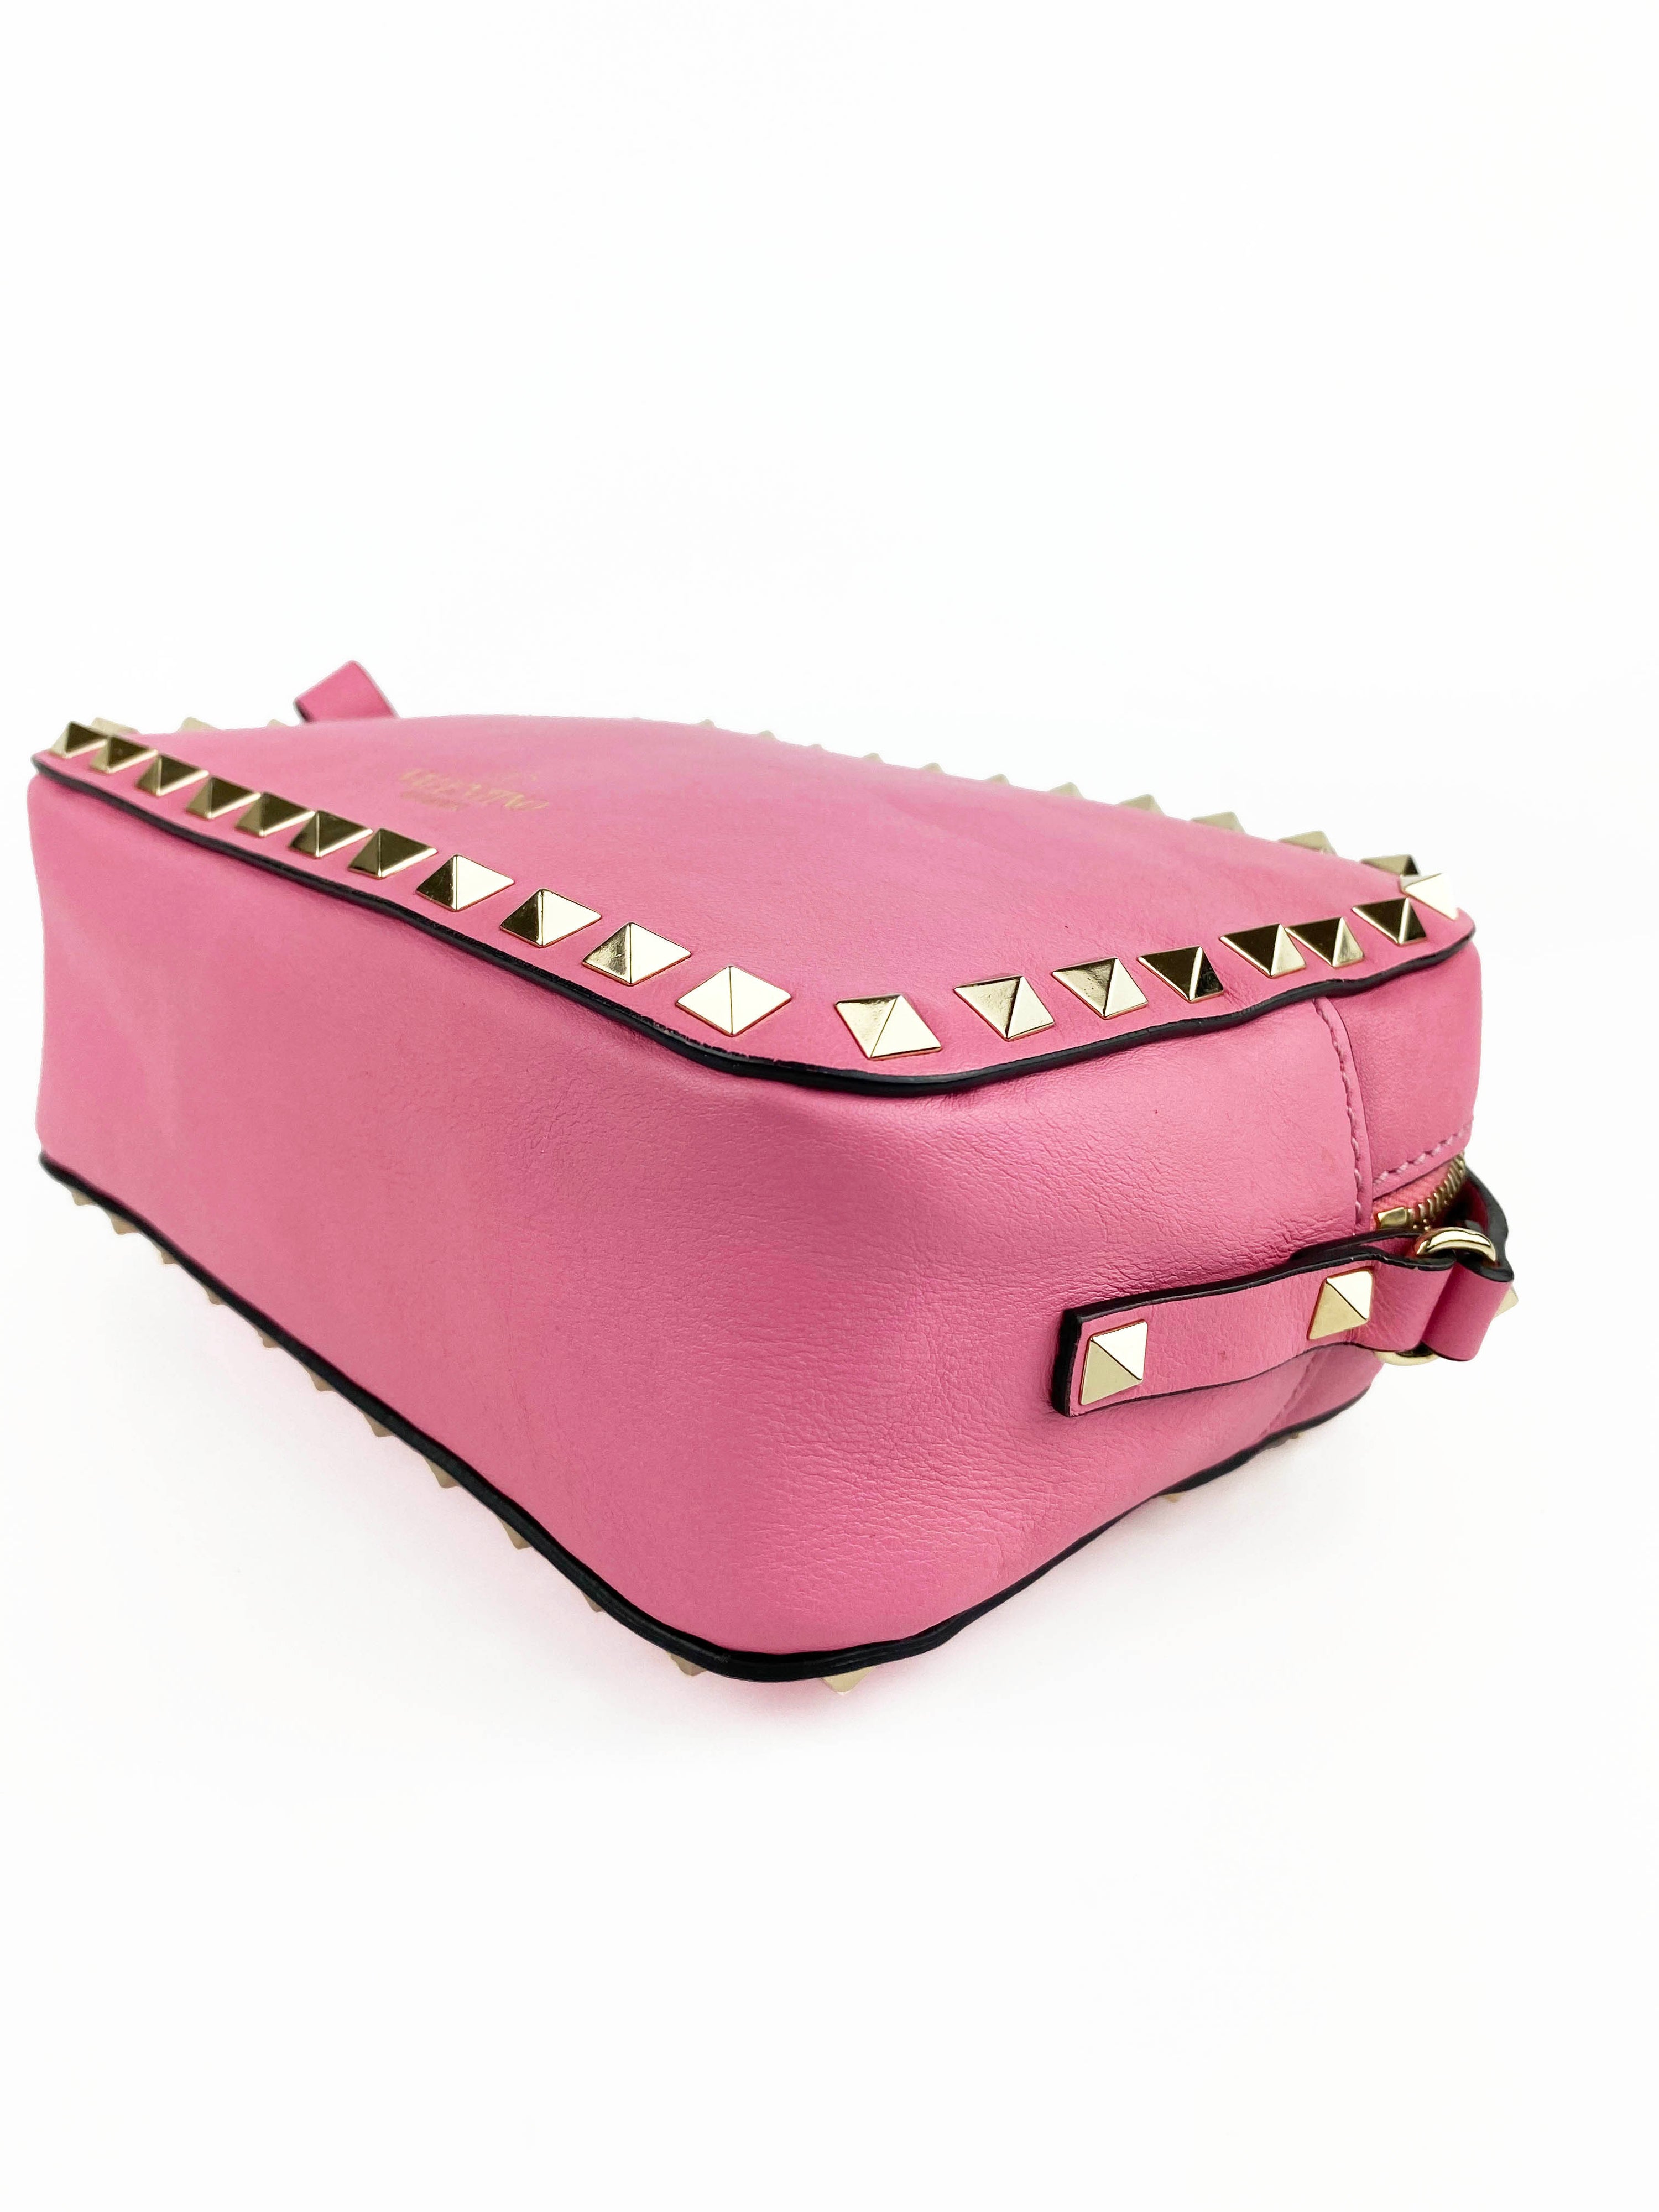 Valentino Garavani Pink Rockstud Camera Bag